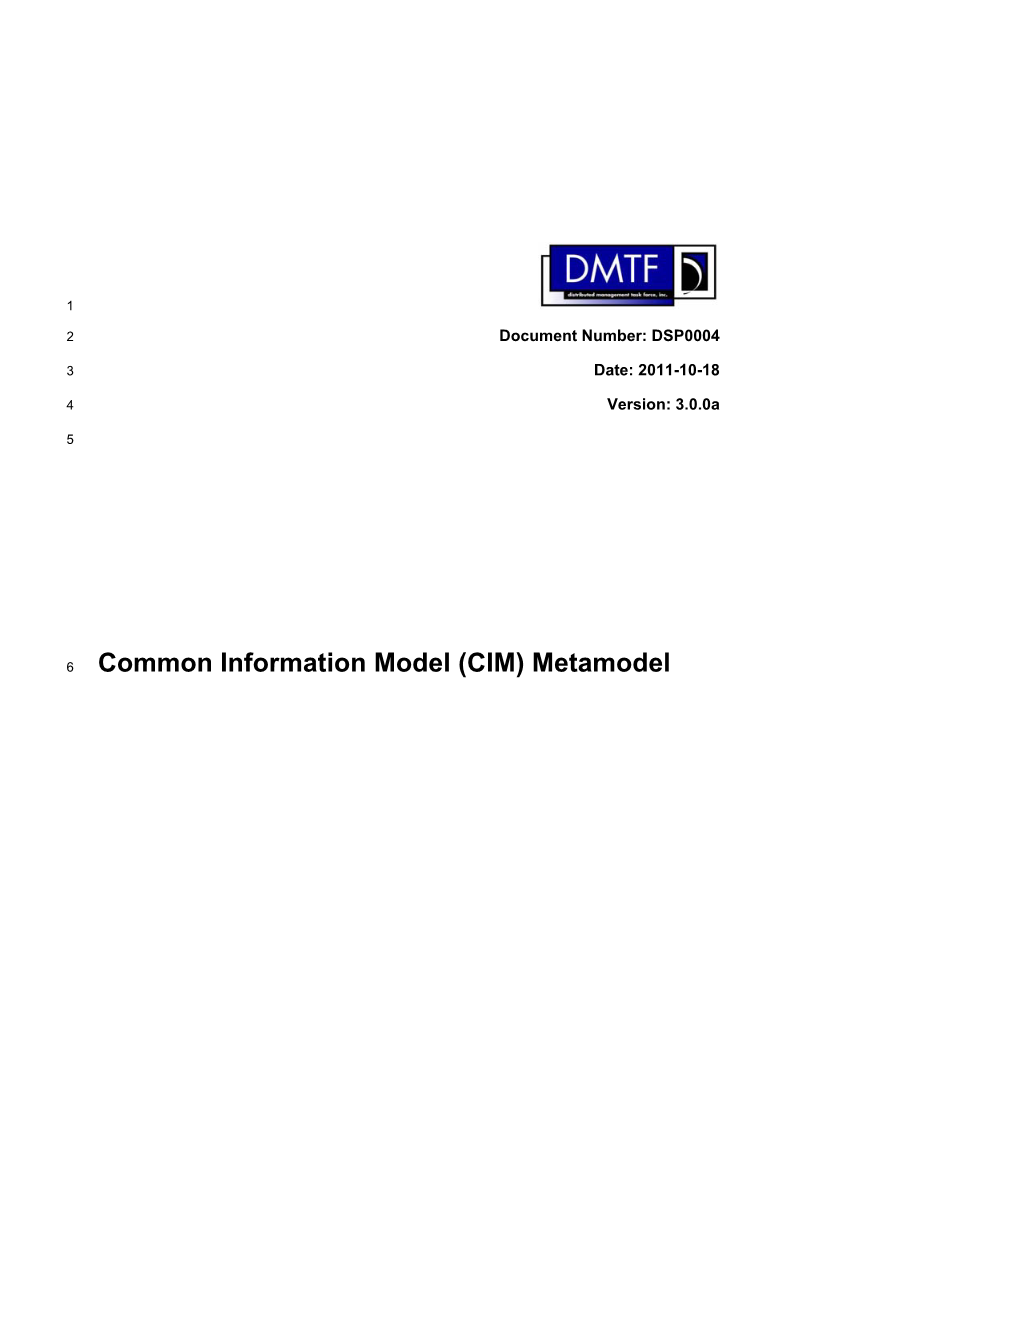 Common Information Model (CIM) Metamodel Common Information Model (CIM) Metamodel DSP0004